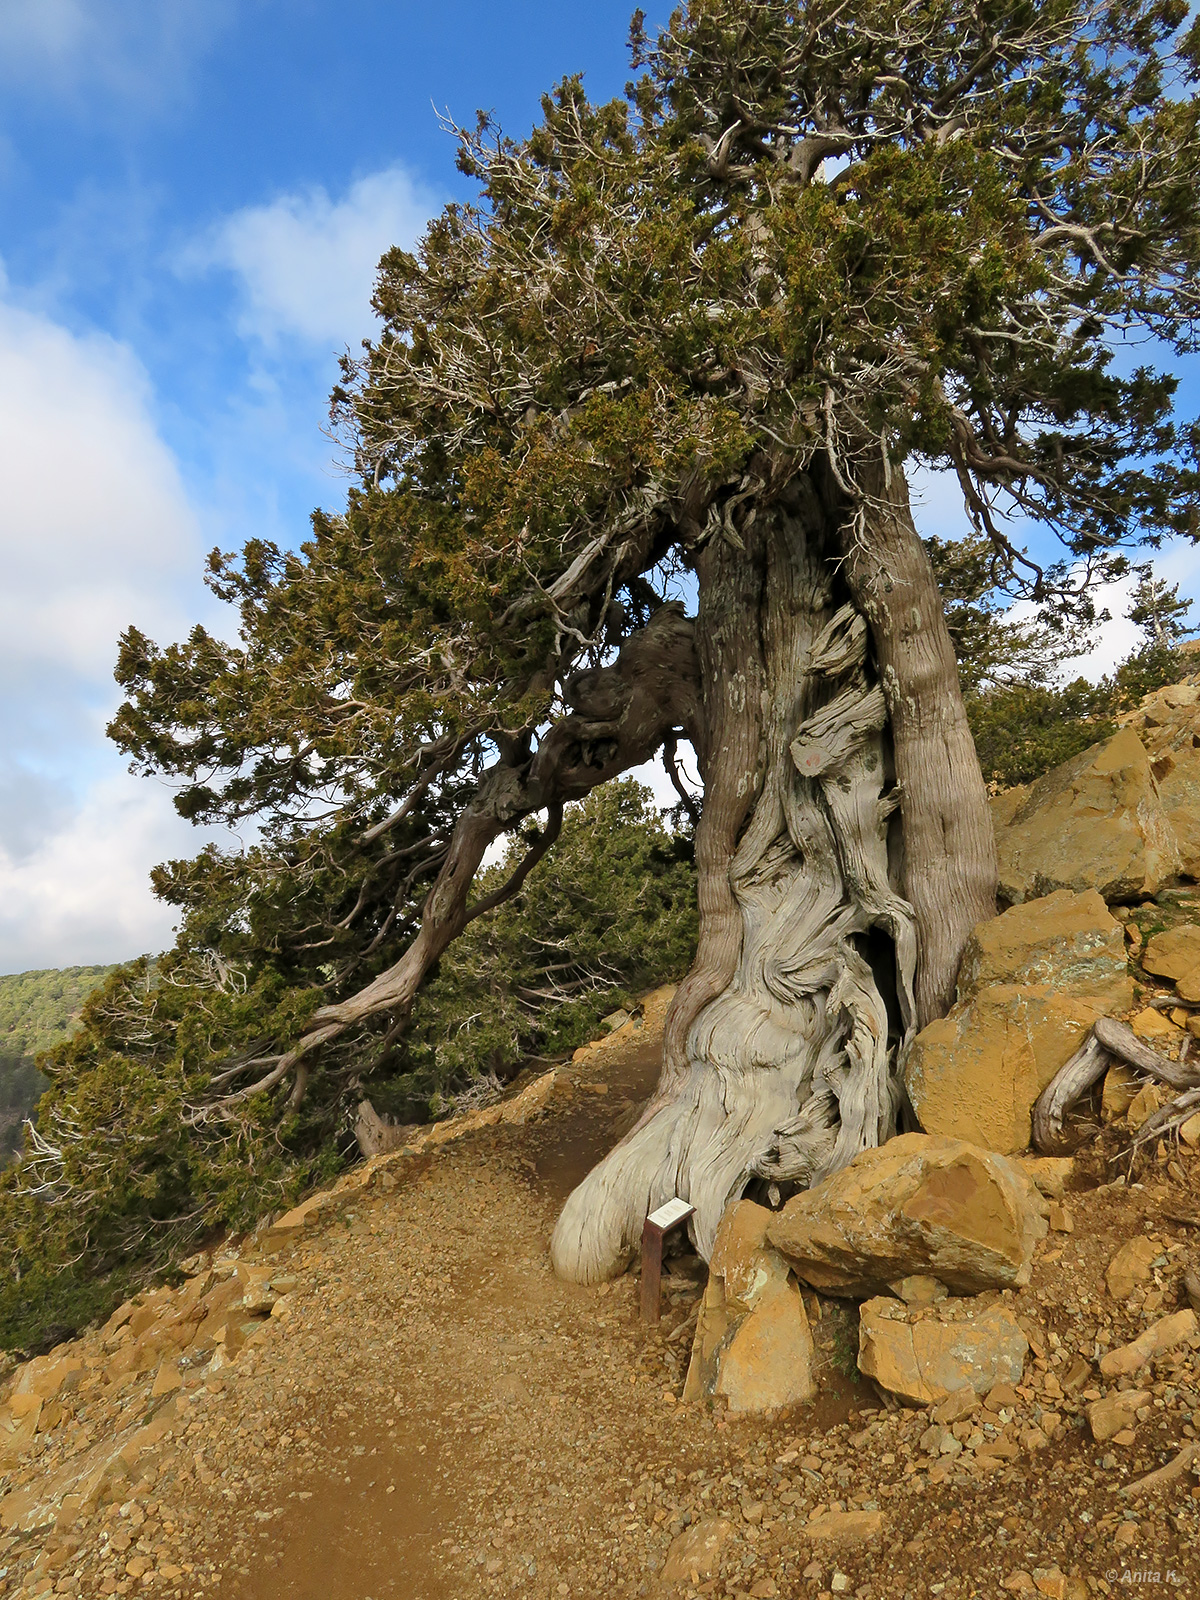 Jałowiec cuchnący (łac. Juniperus foetidissima)